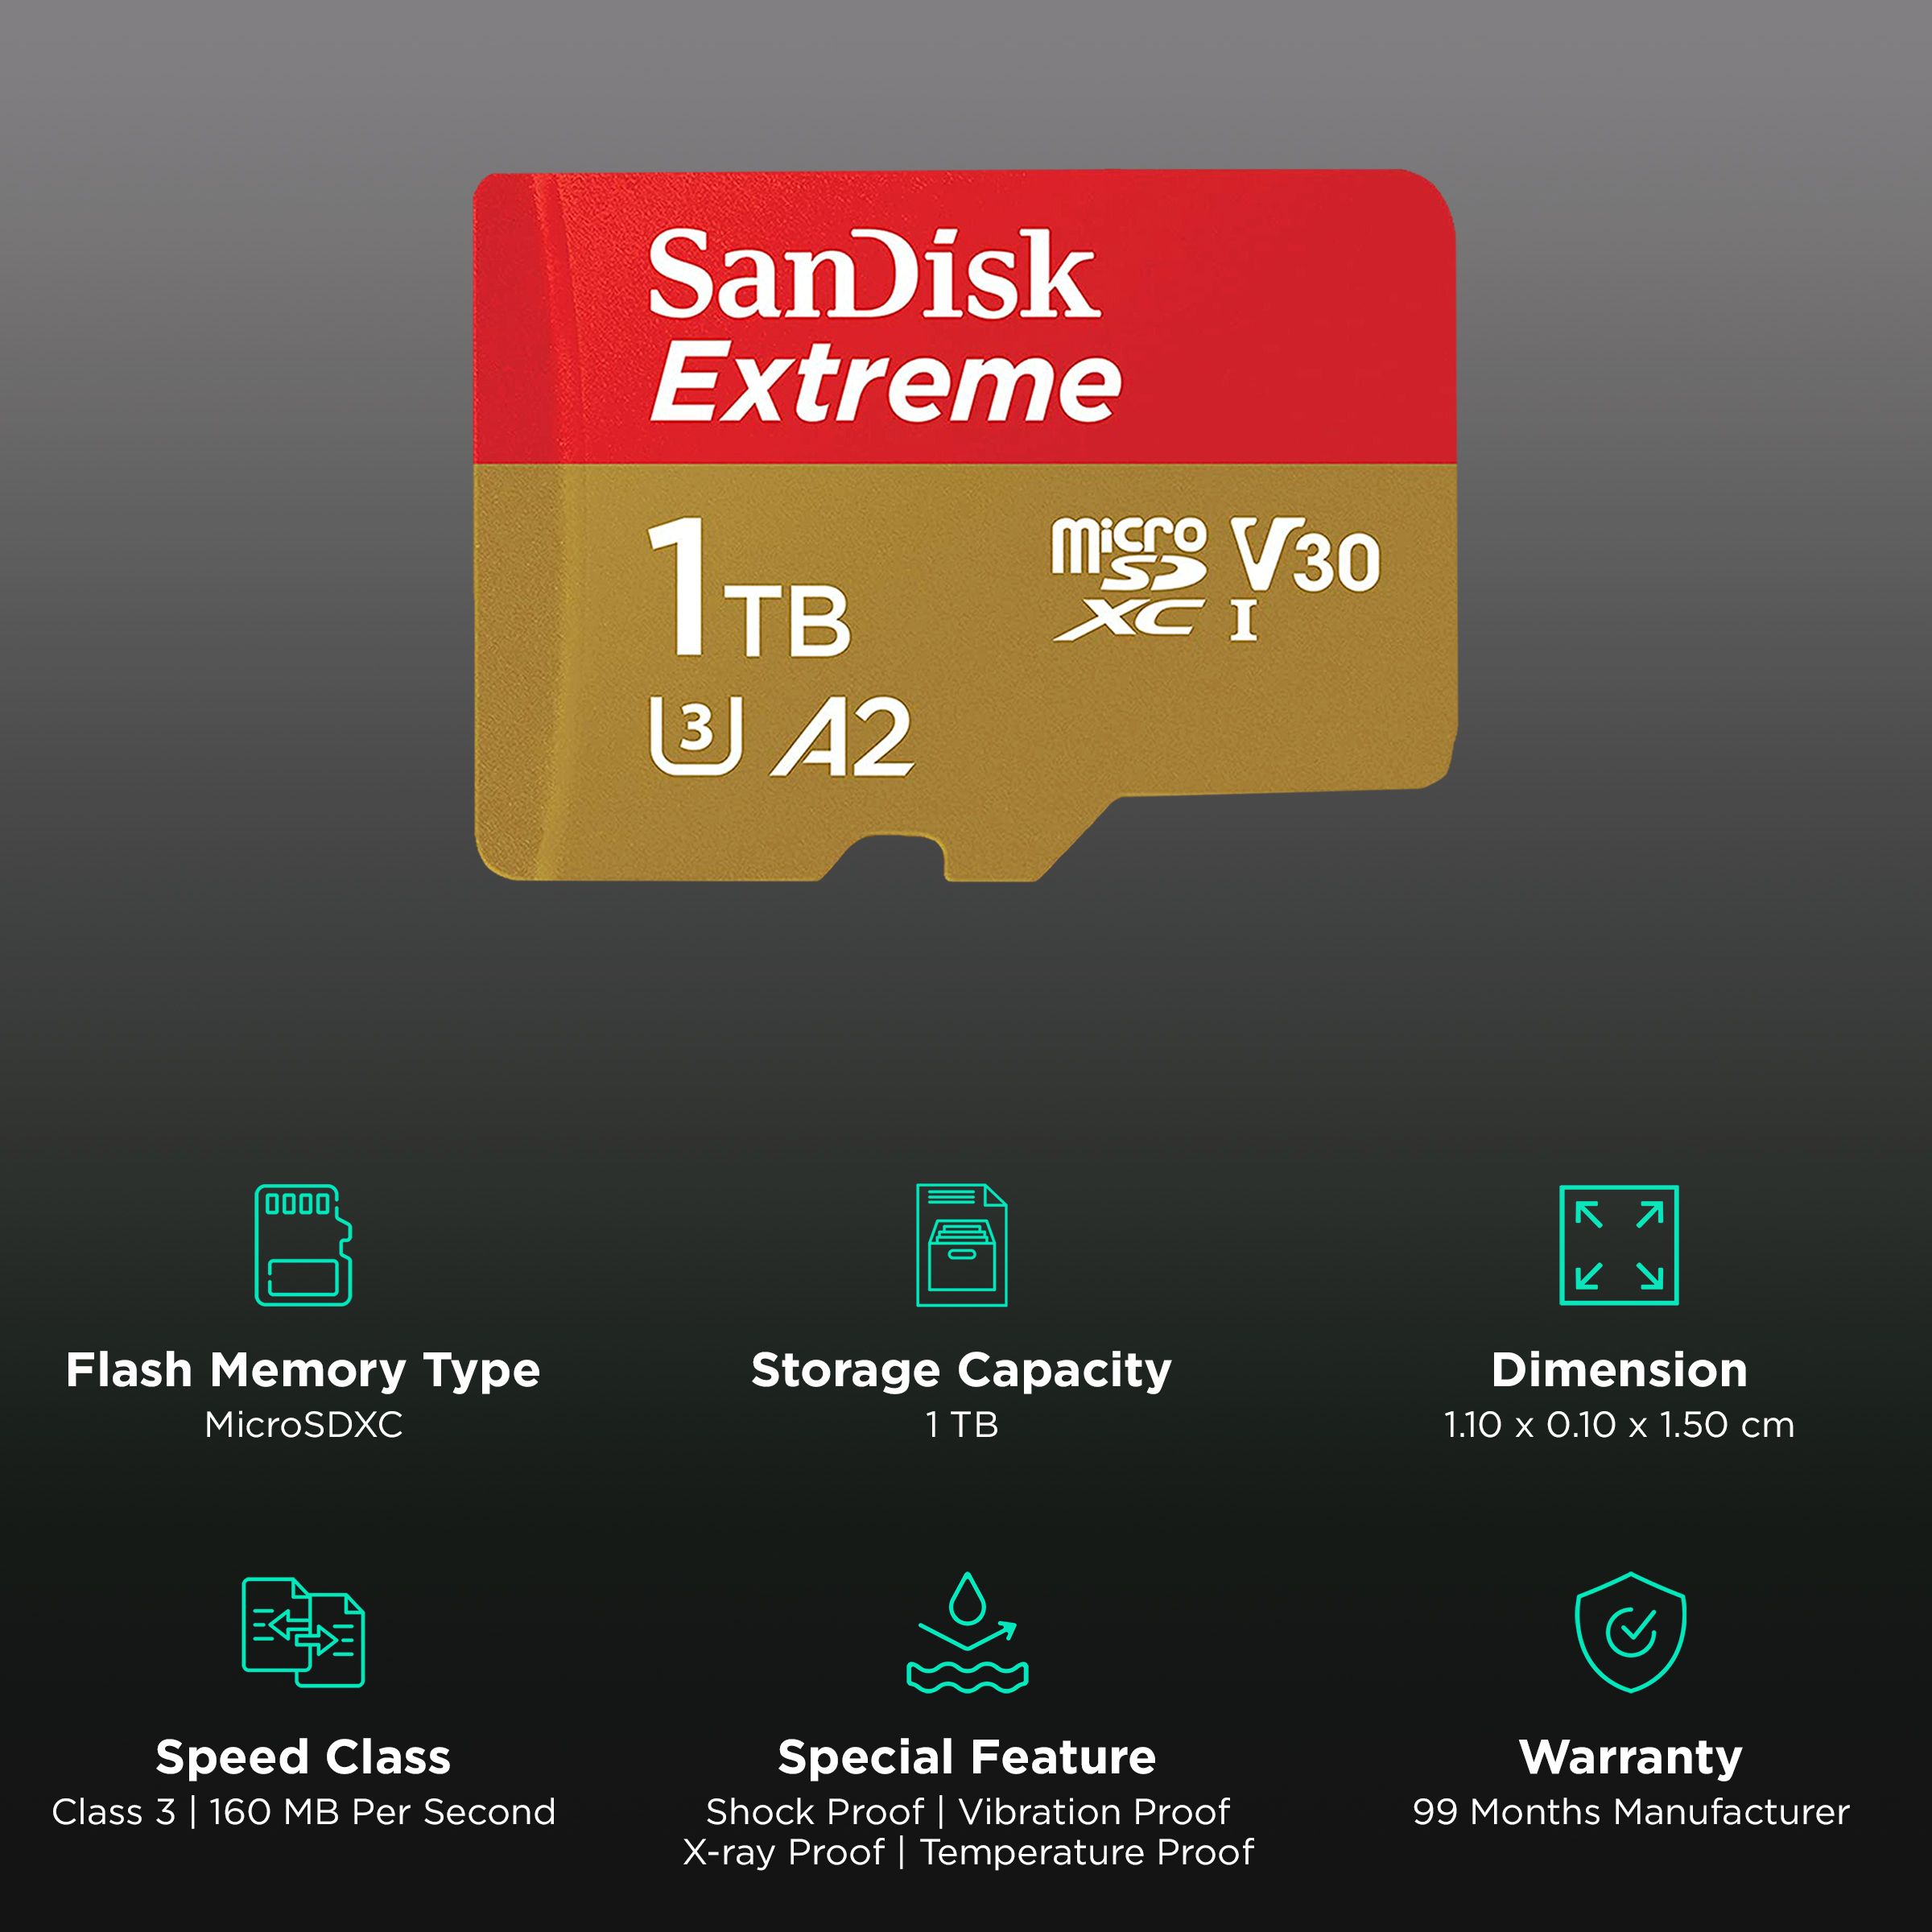 Buy SanDisk Extreme MicroSDXC 1TB Class 3 160MB/s Memory Card